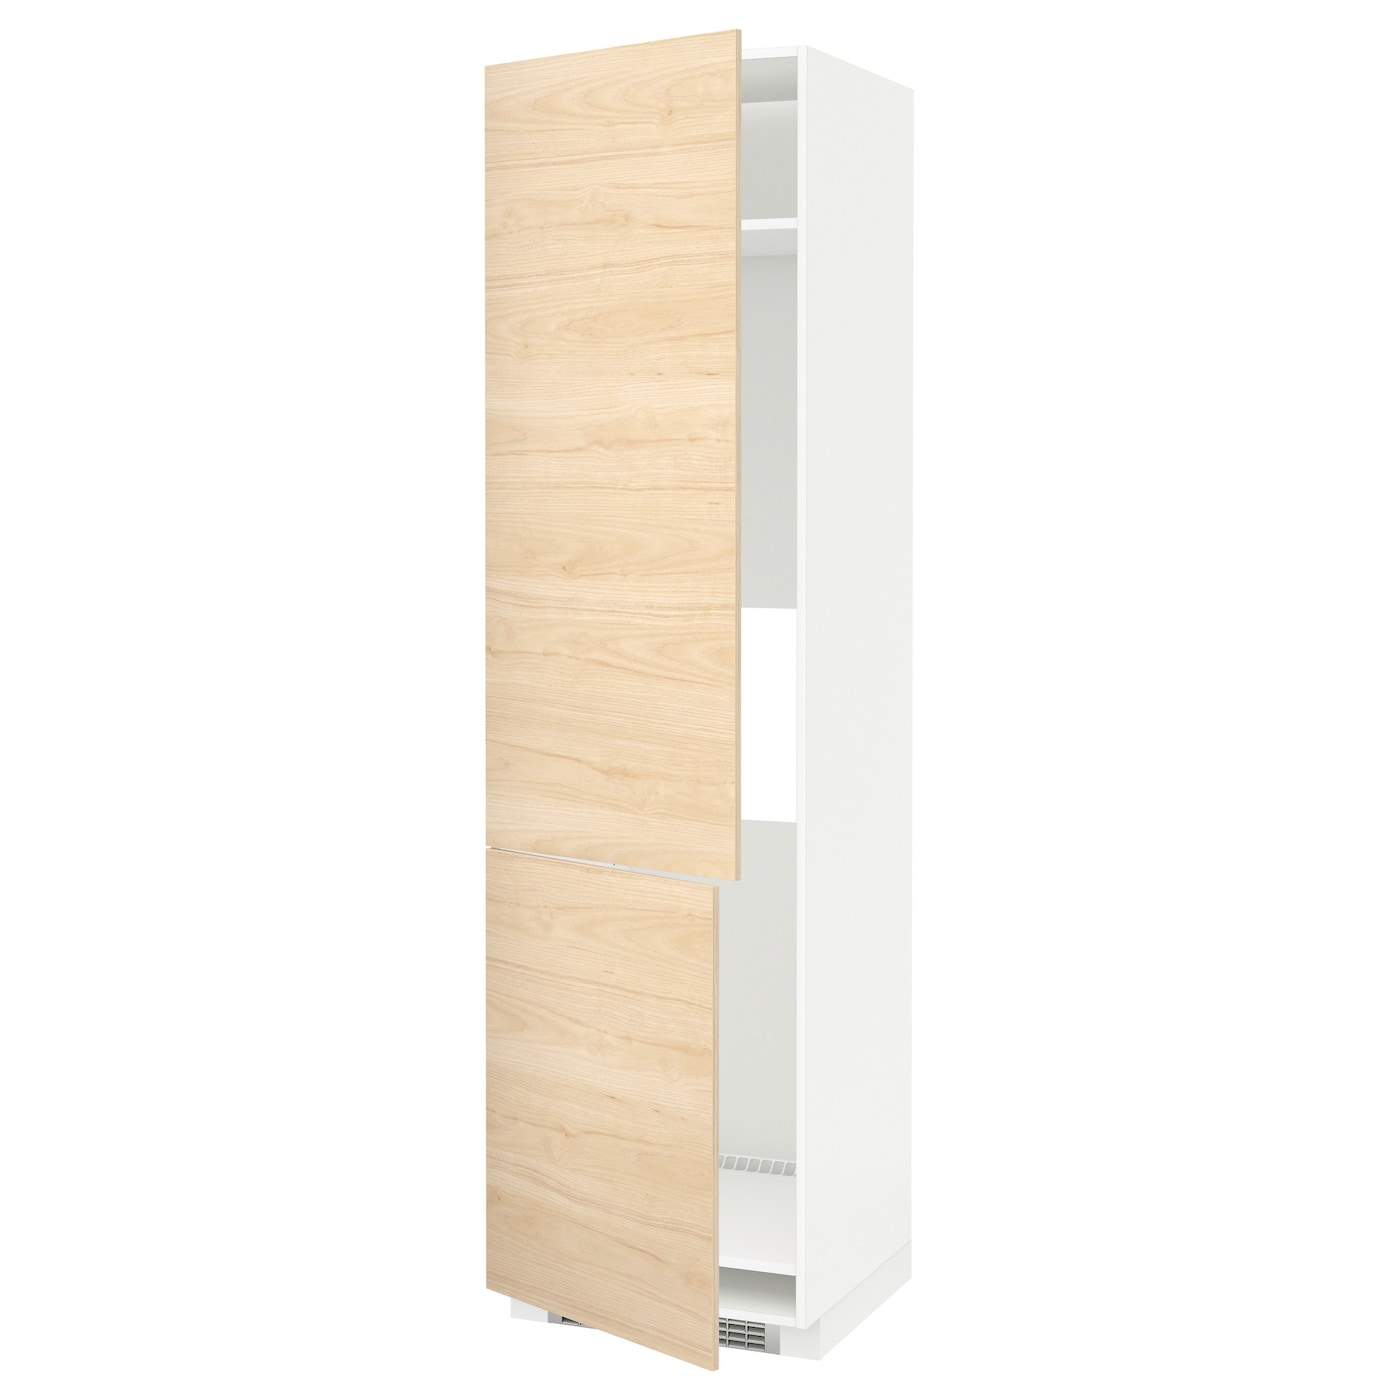 Высокий кухонный шкаф - IKEA METOD/МЕТОД ИКЕА, 220х60х60 см, белый/под беленый дуб